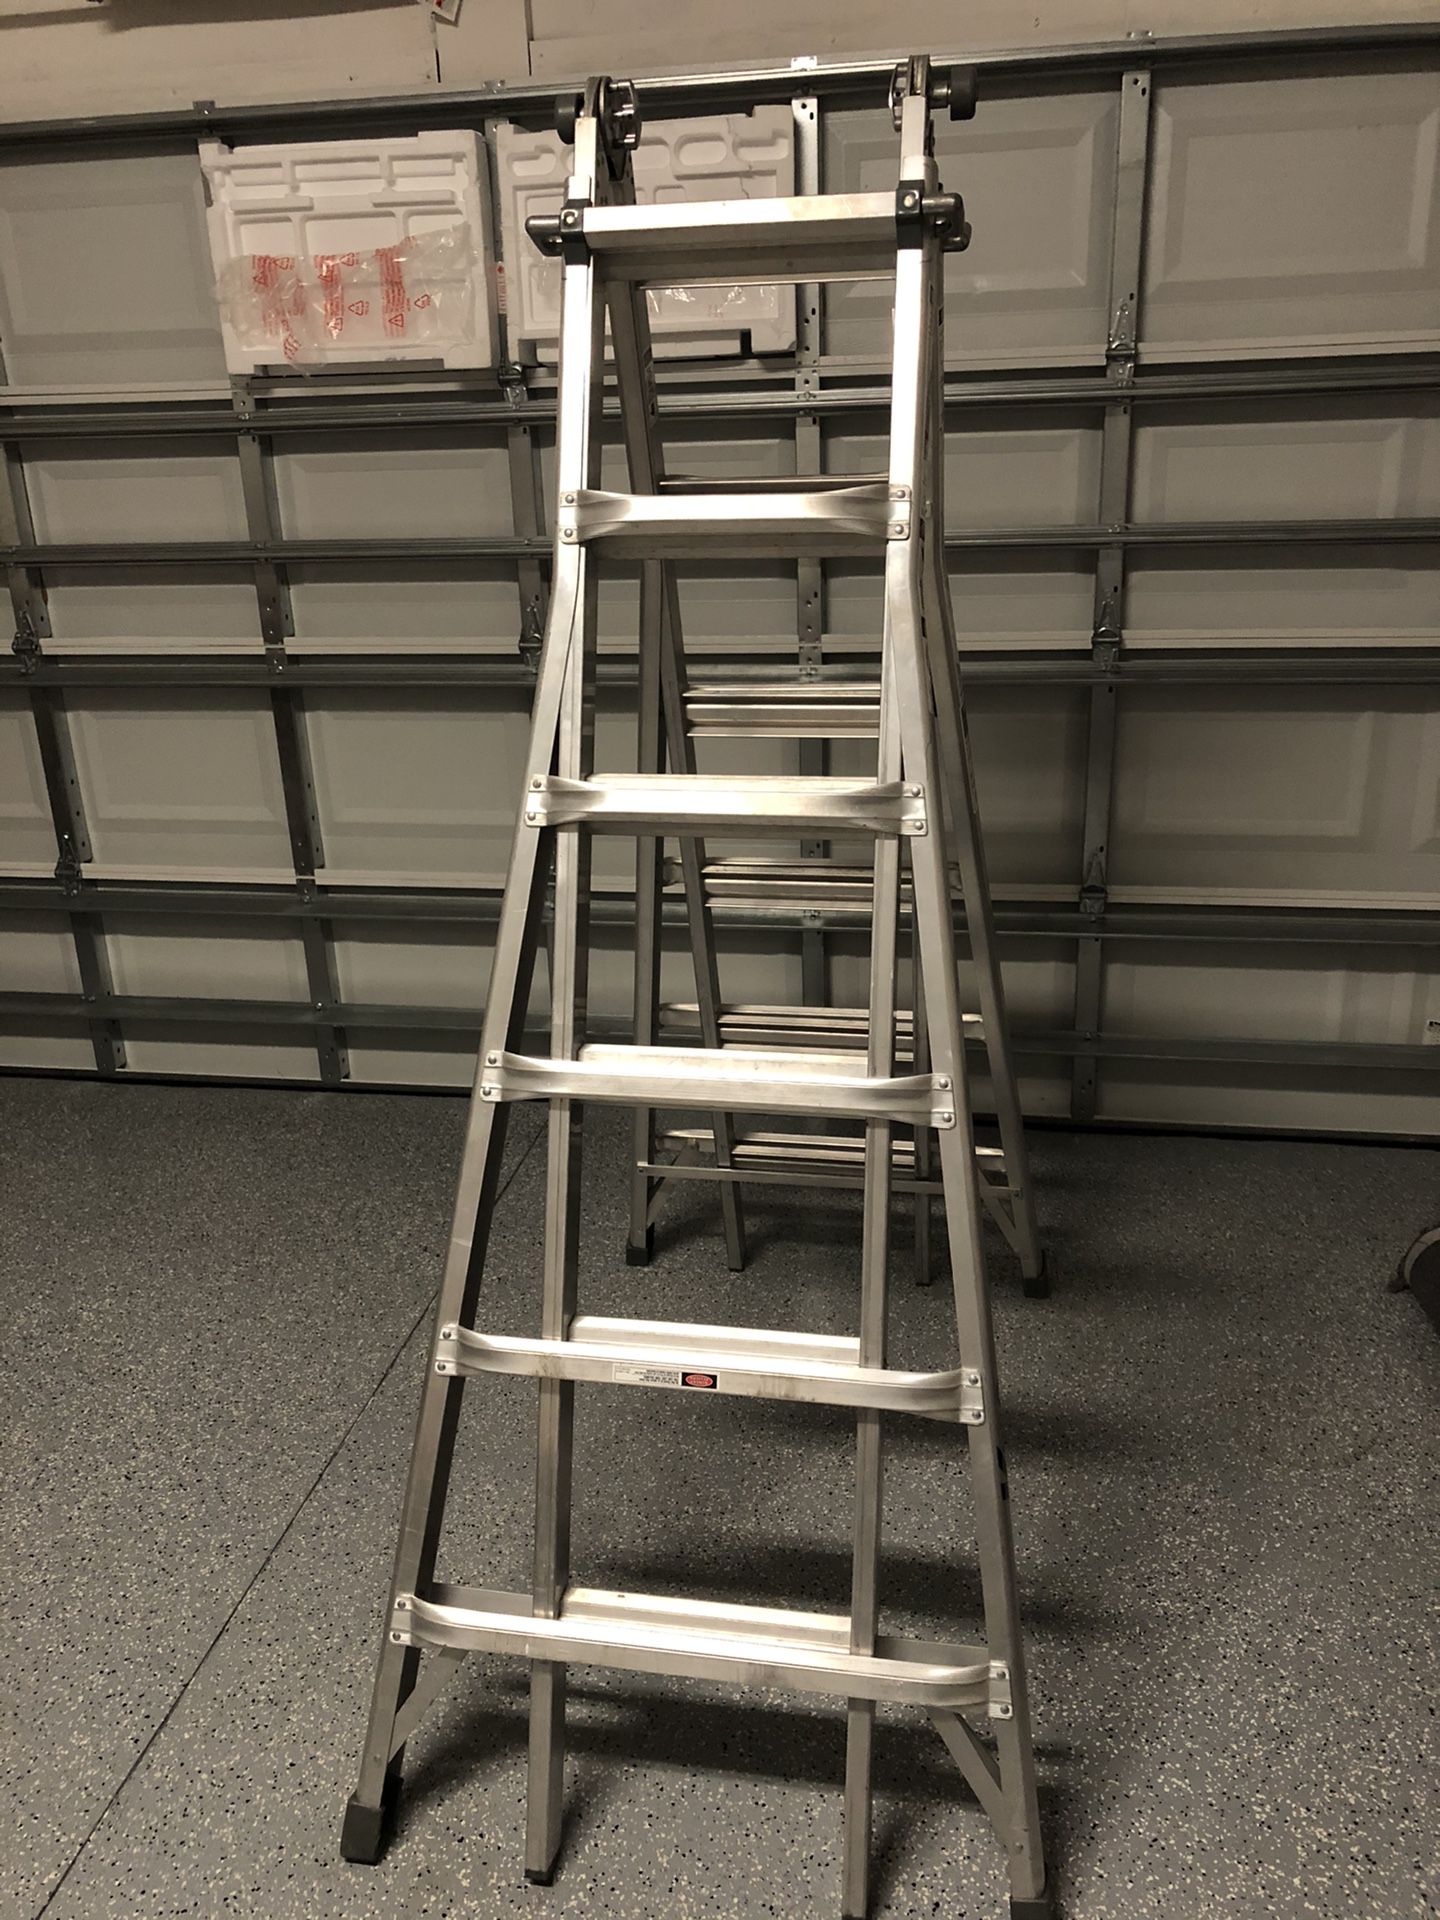 Keller KMT-26 heavy duty ladder